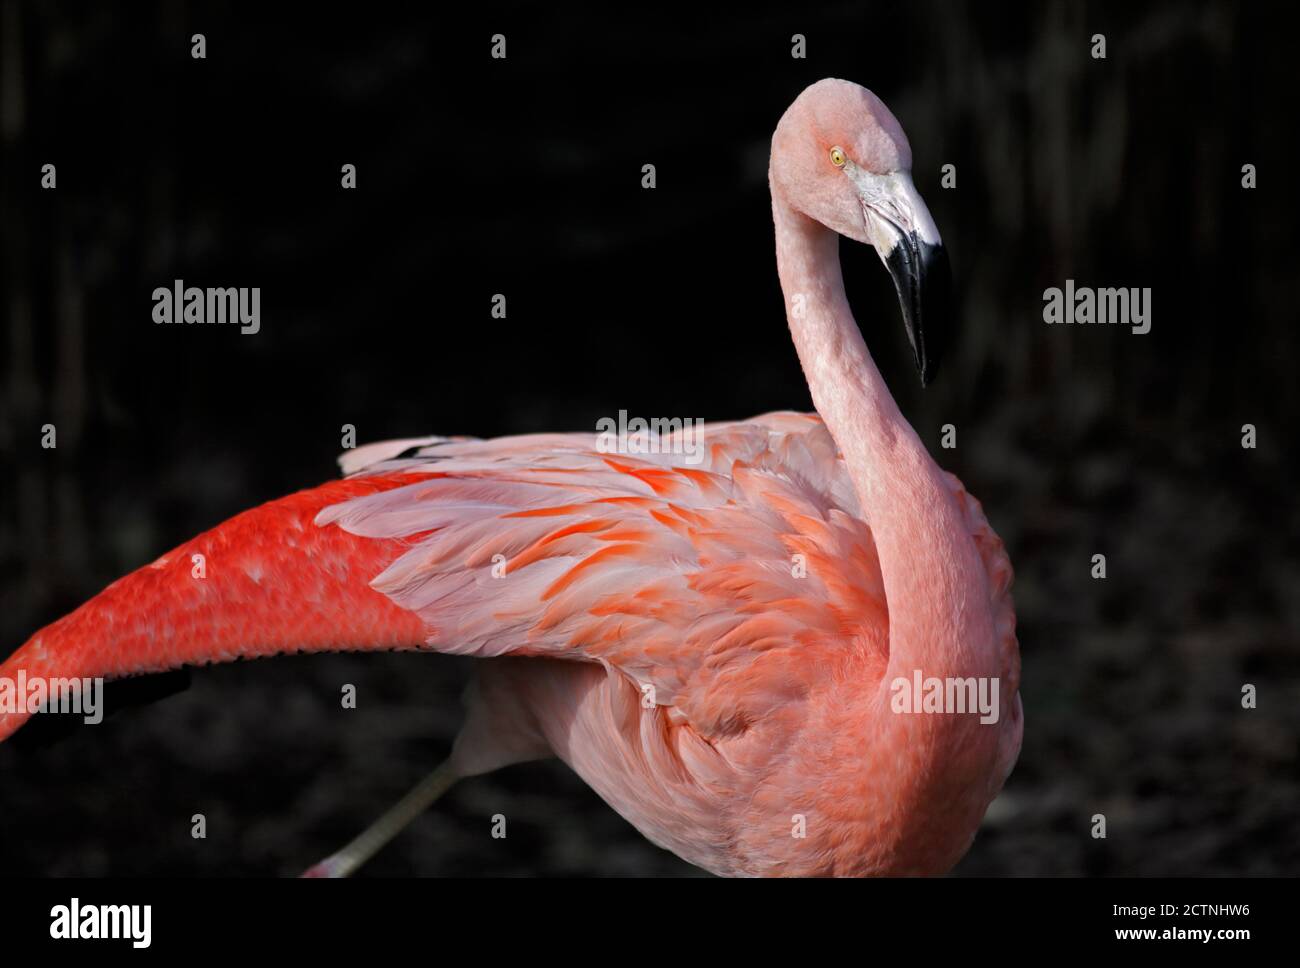 Chilean Flamingo (phoenicopterus chilensis) Stock Photo